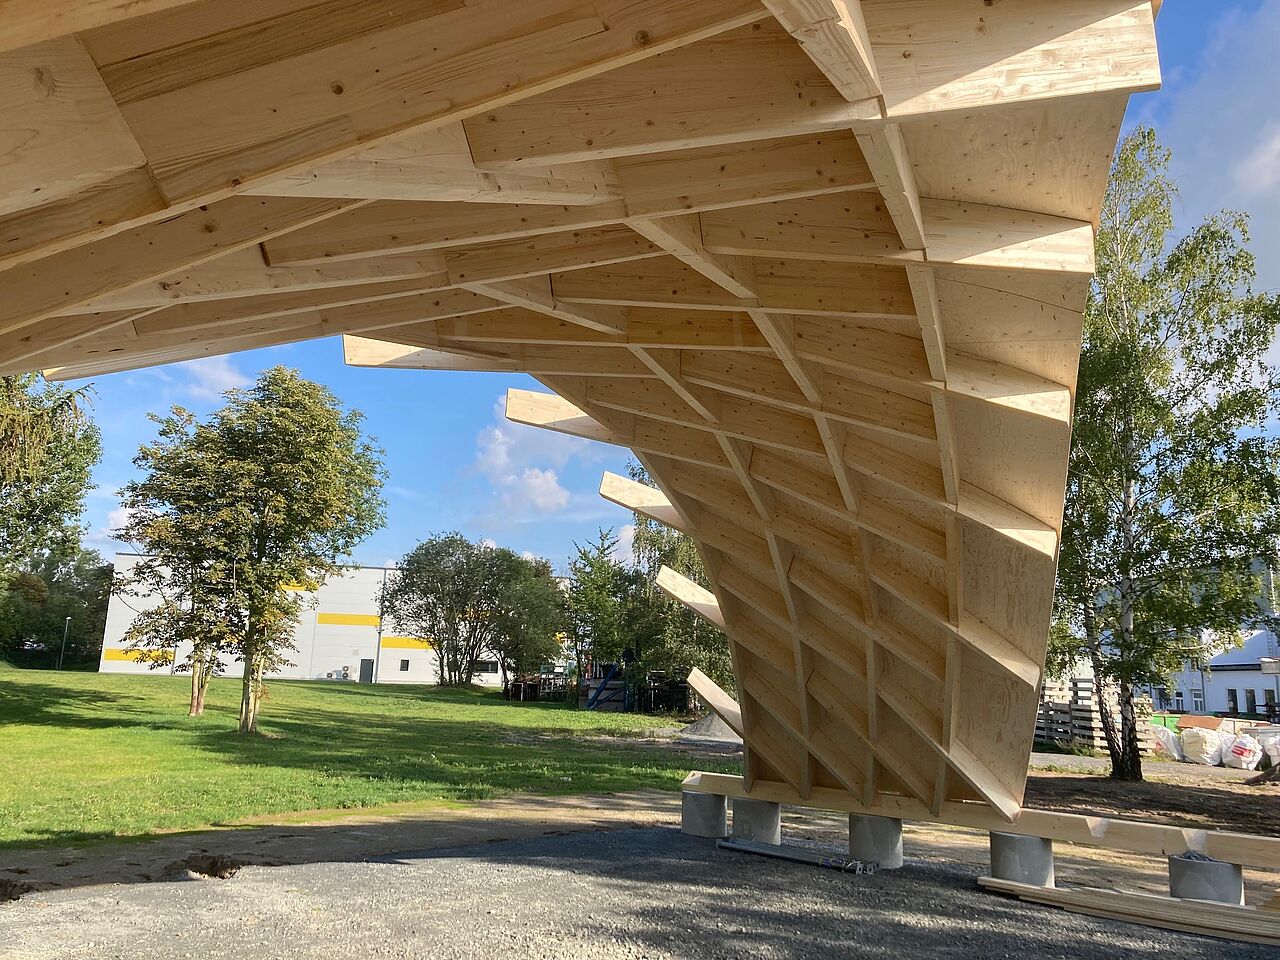 Dachkonstruktion aus Holz mit Rippen